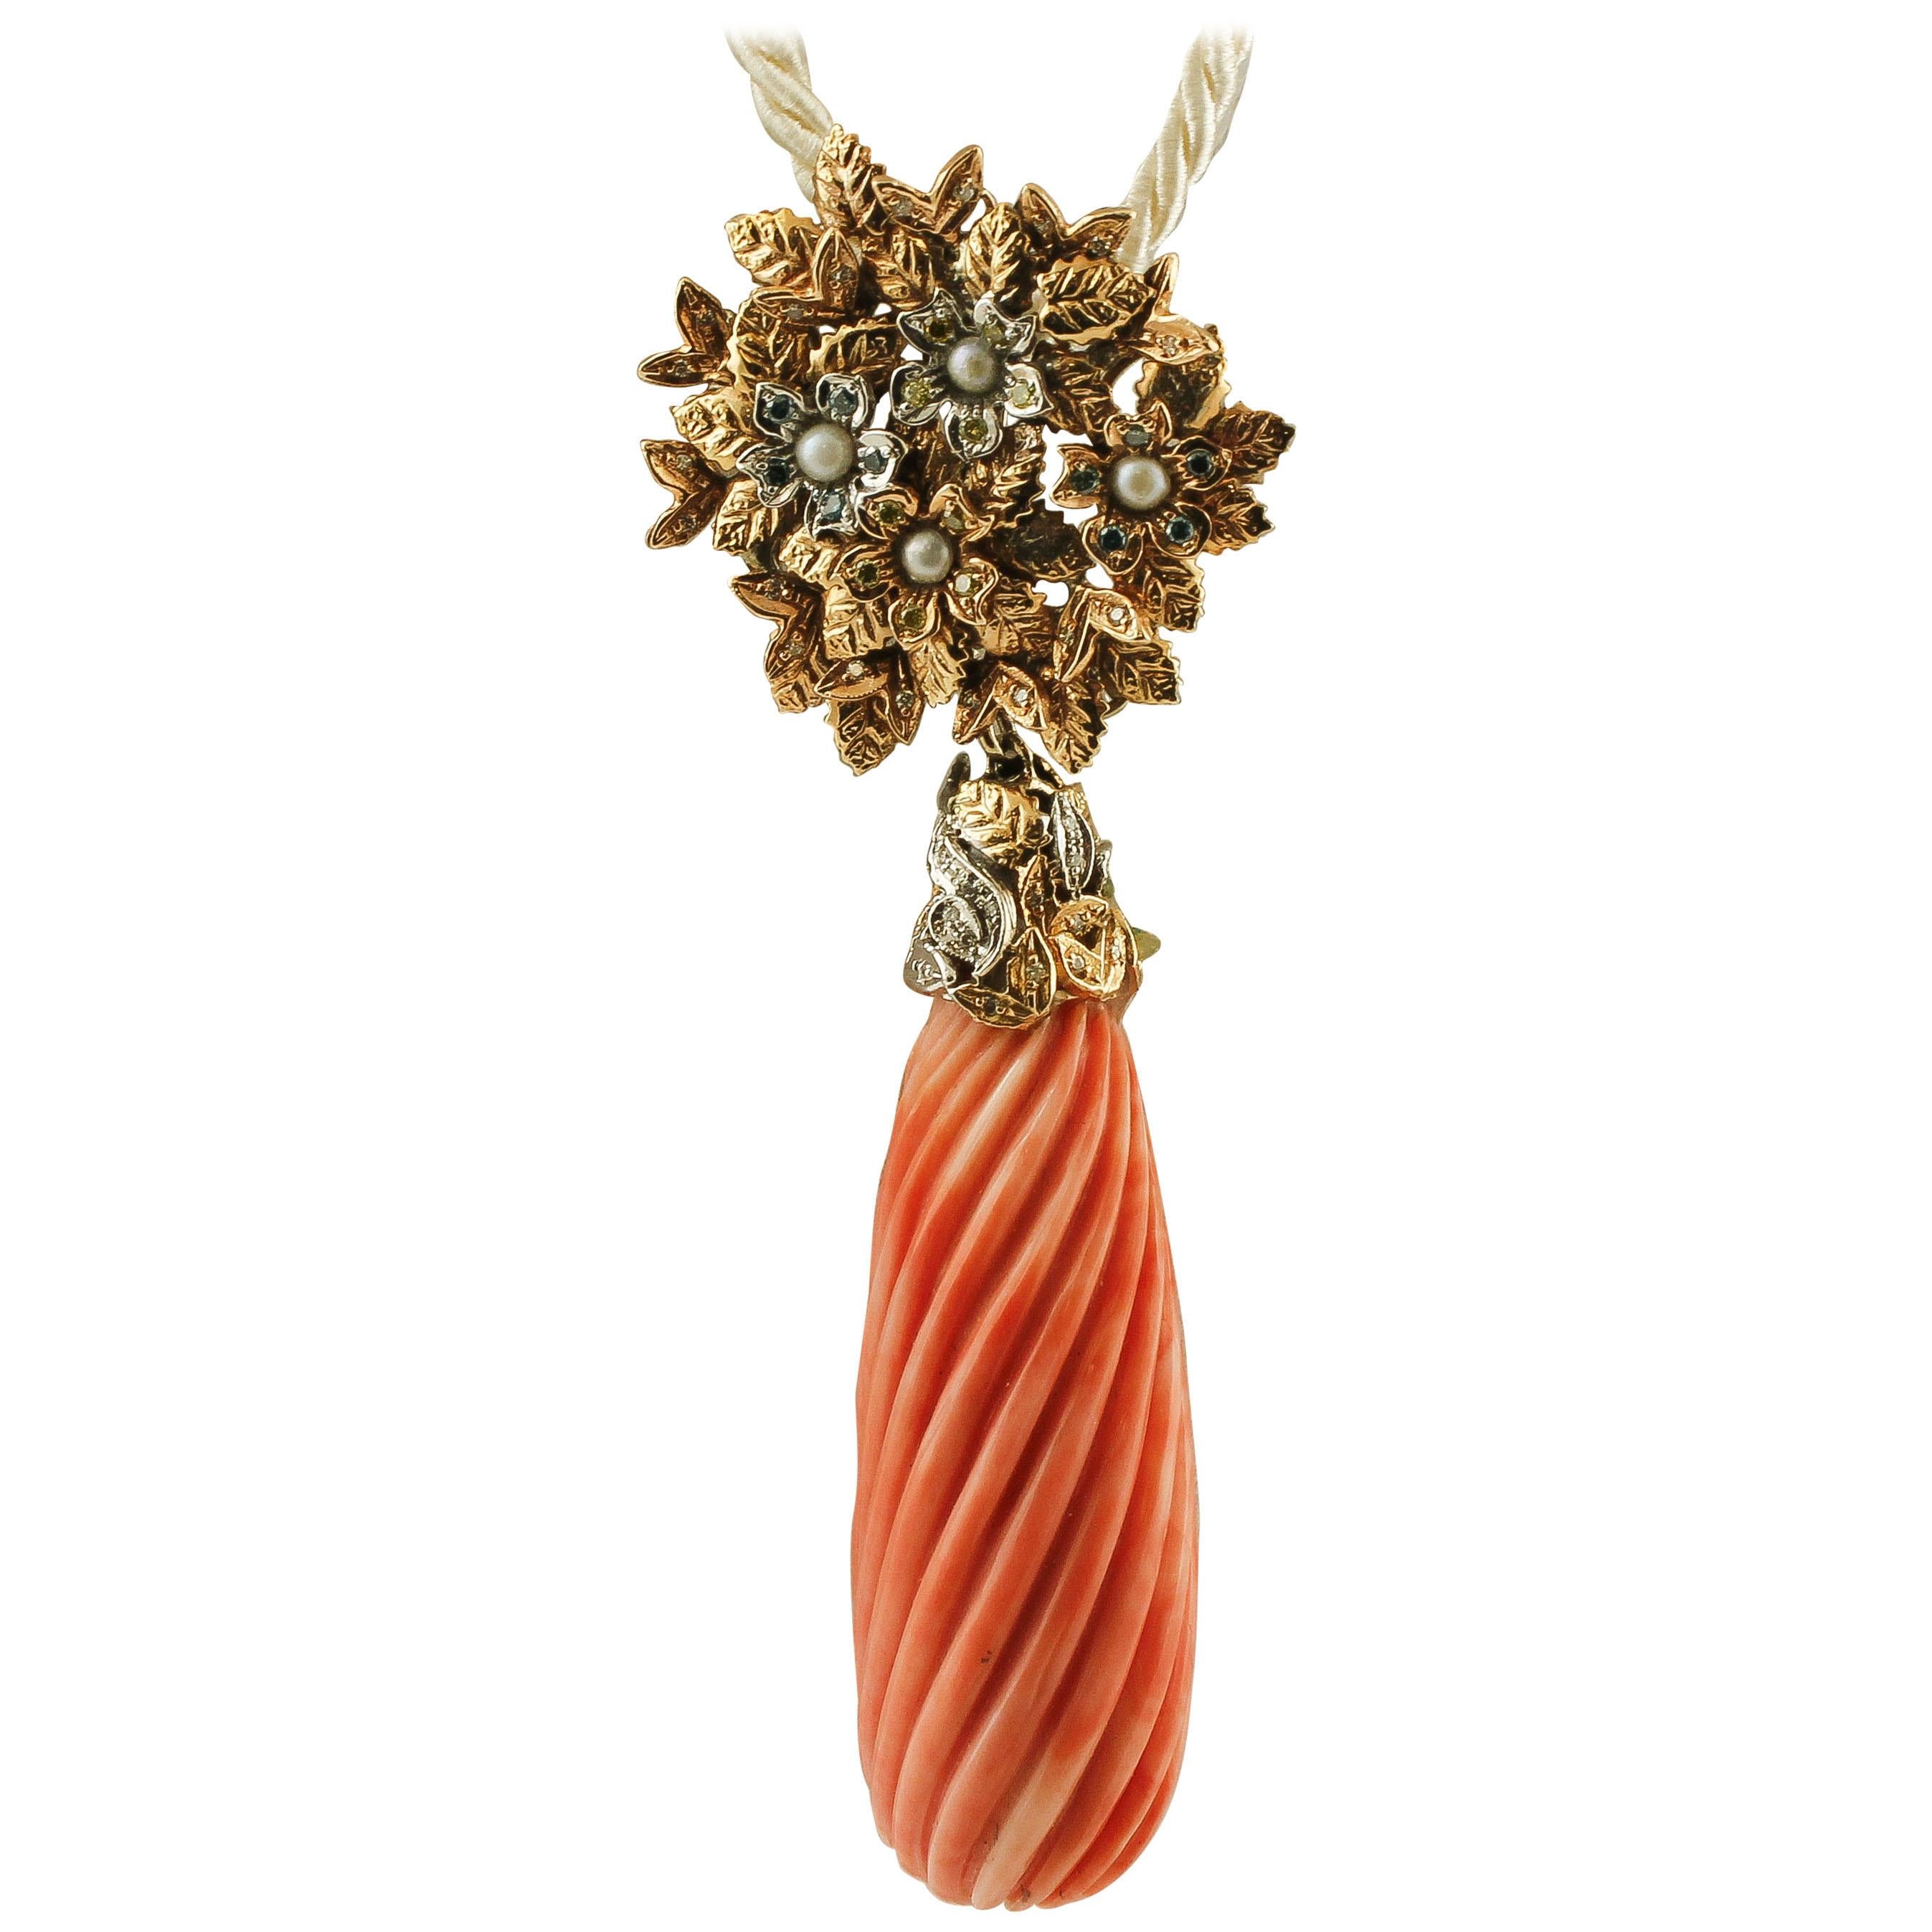 22 g Engraved Big Orange Coral, Diamonds, Pearls, 14K Yellow/White Gold Pendant For Sale